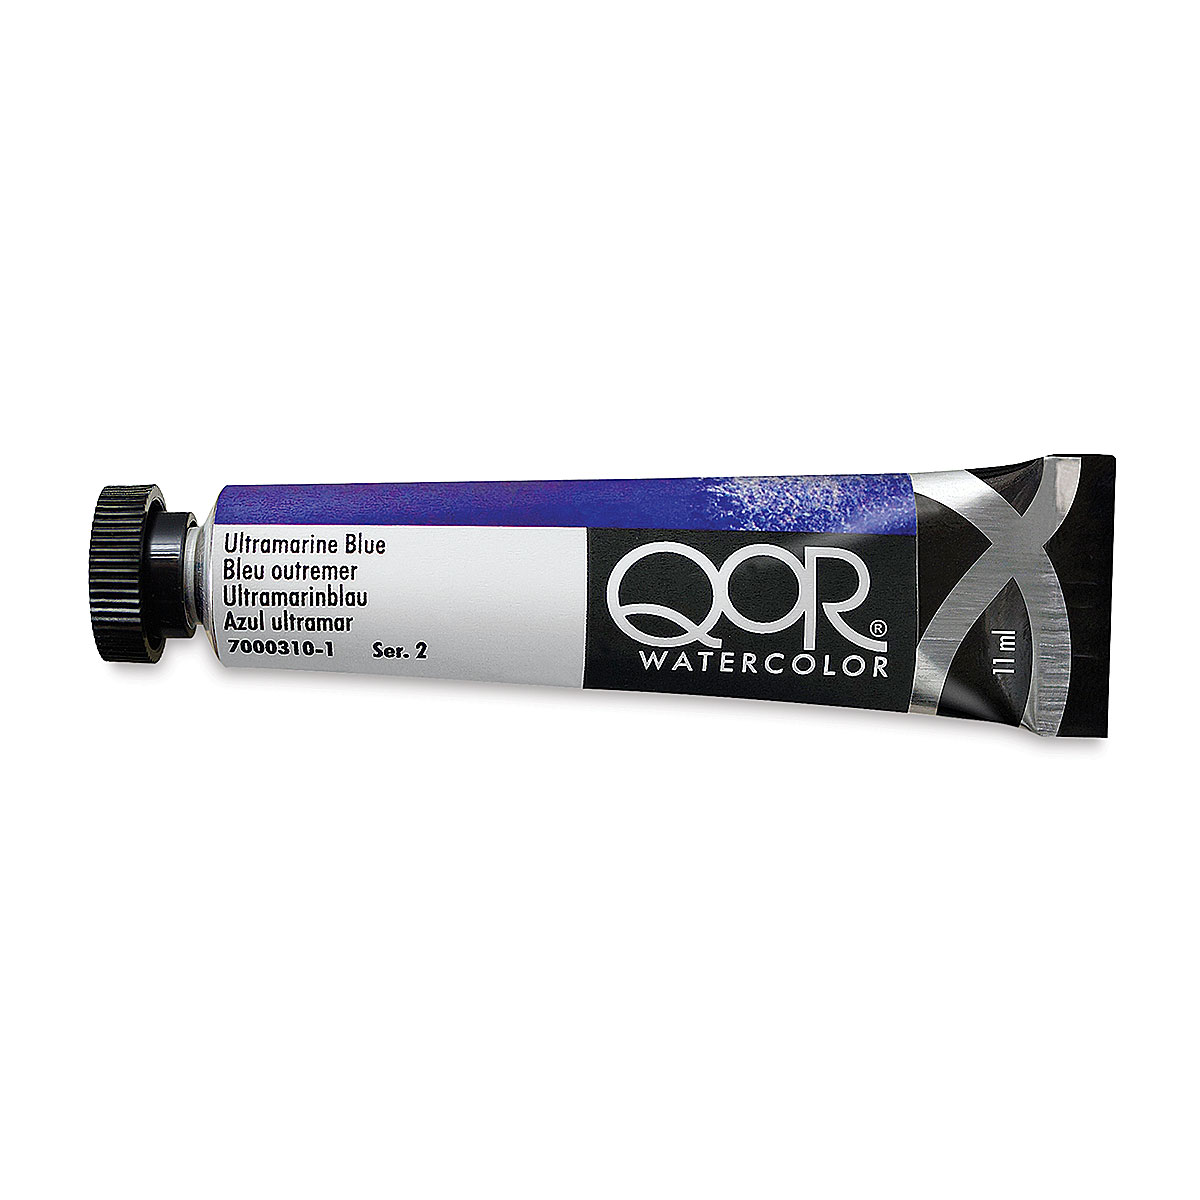 QoR Watercolor Paint - Cobalt Teal, 11ml Tube